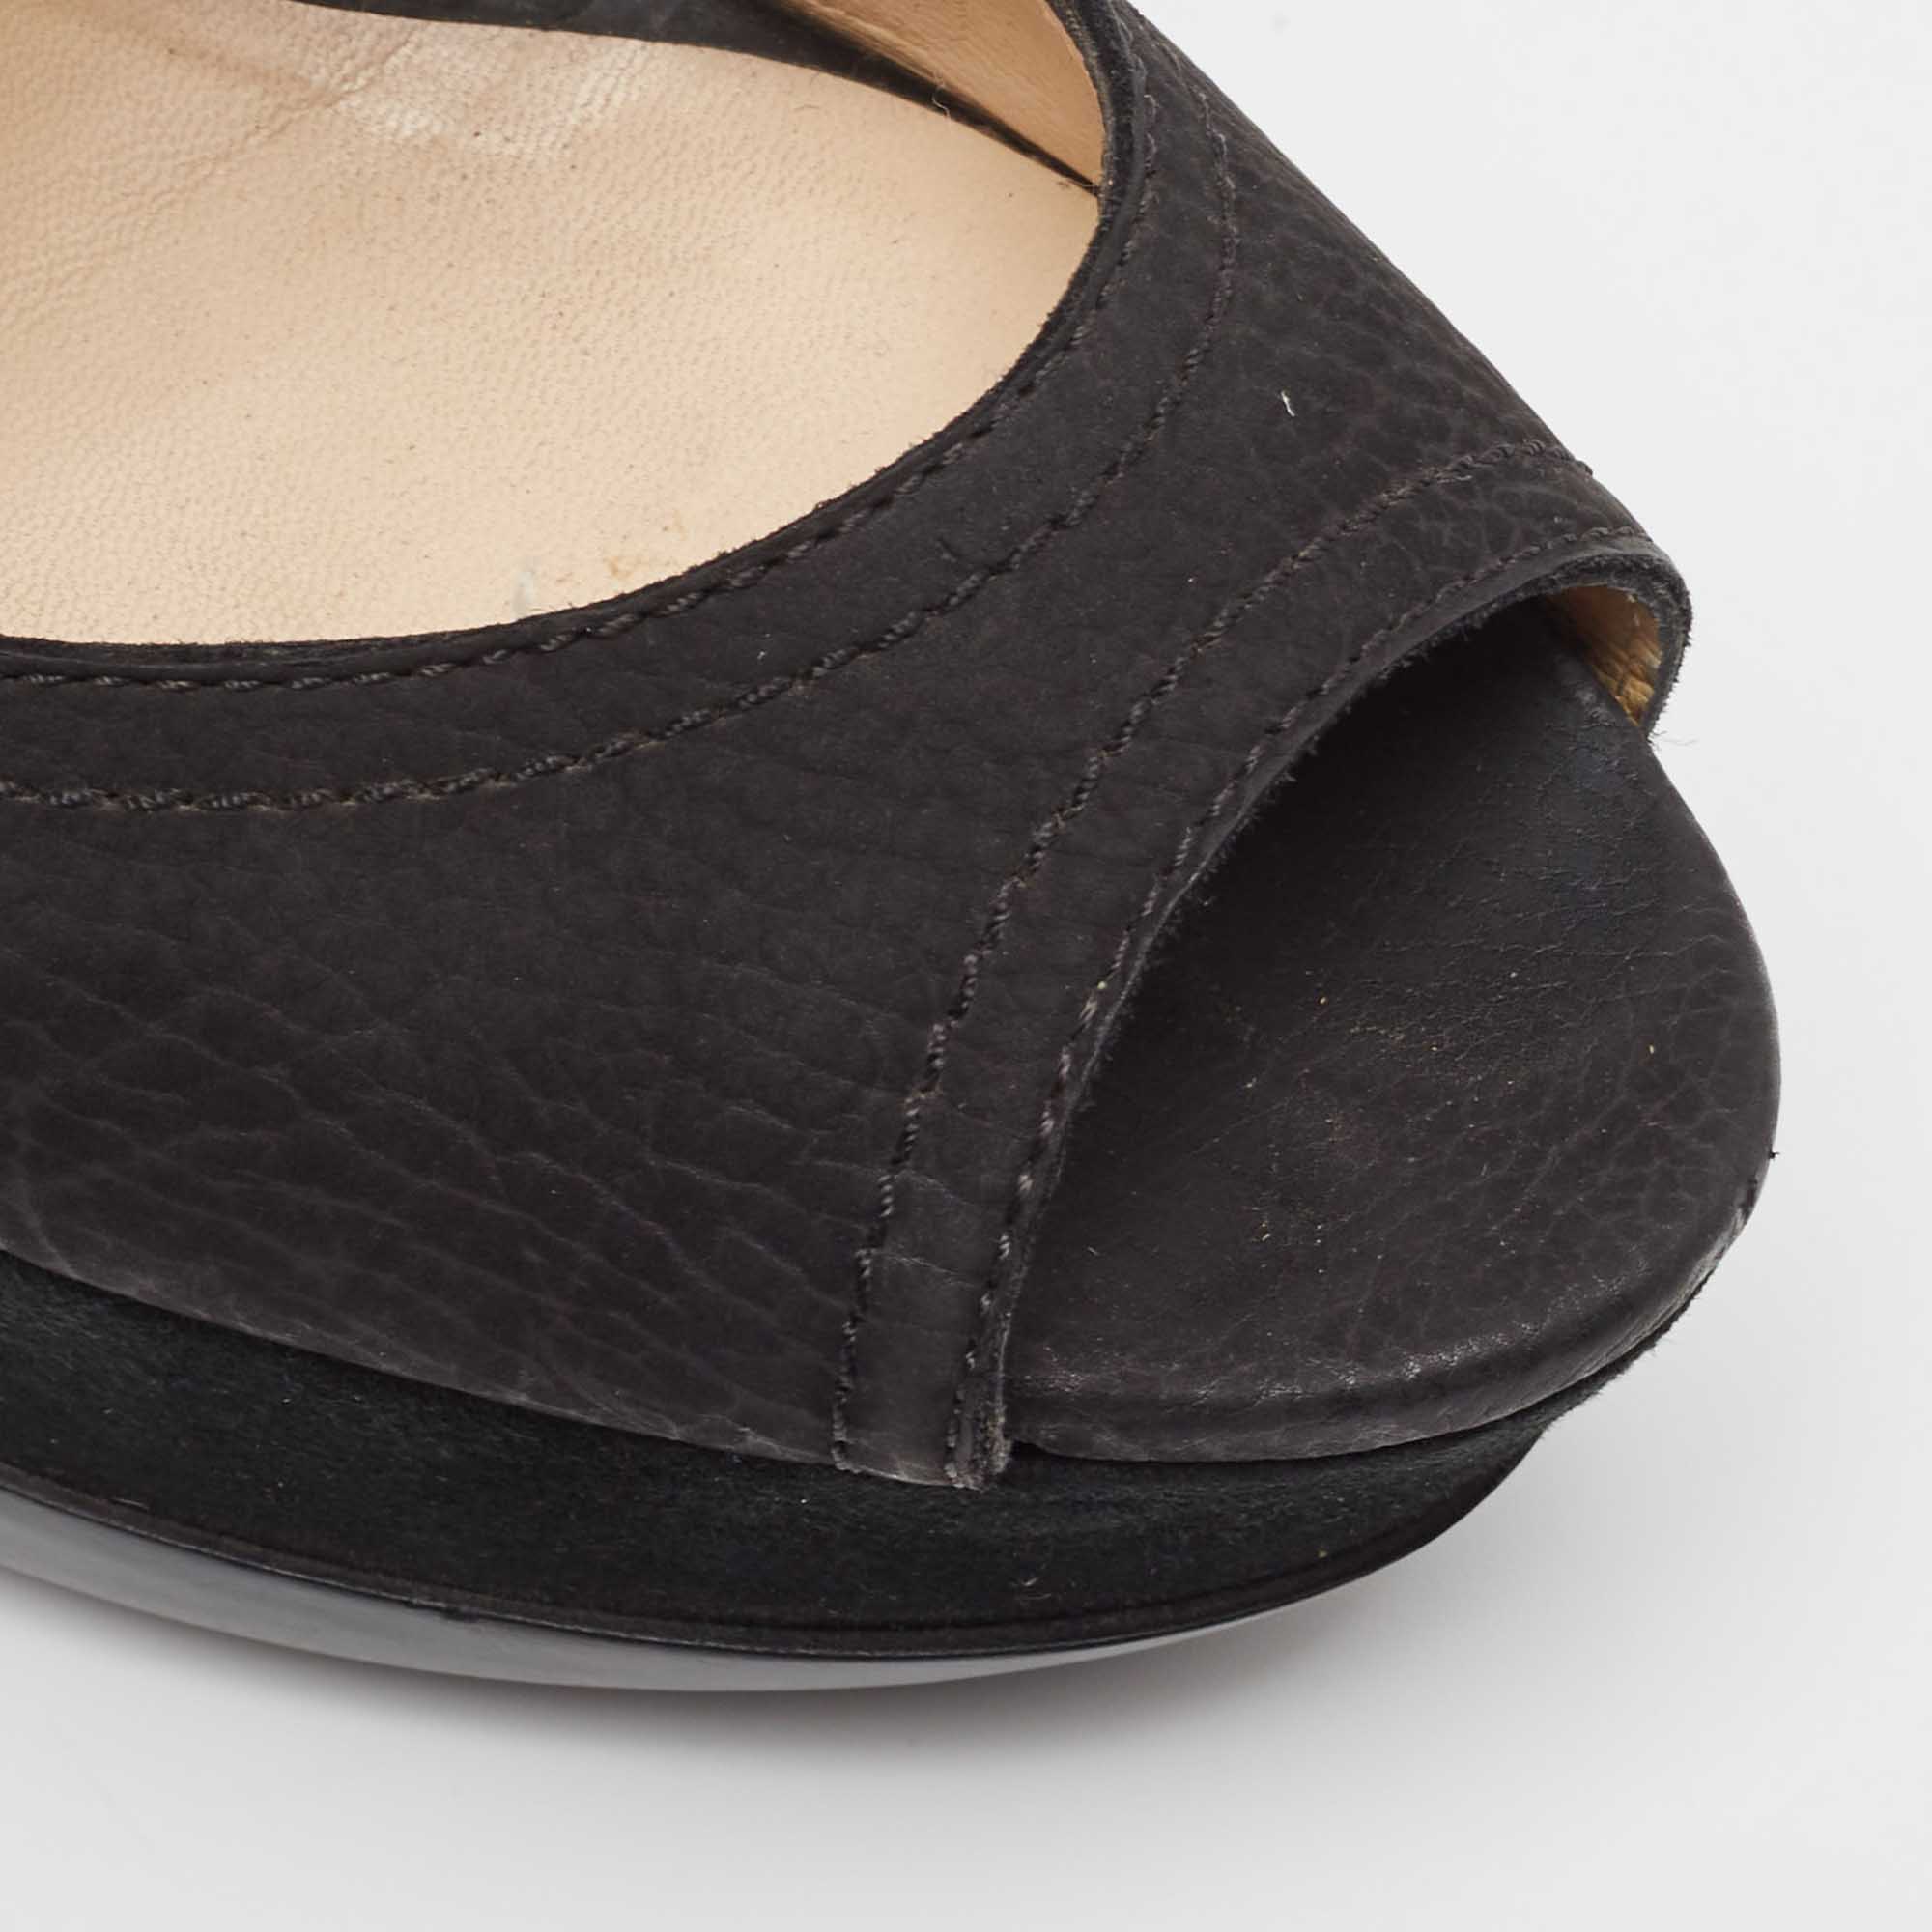 Jimmy Choo Black Nubuck Leather Ankle Strap Sandals Size 36.5